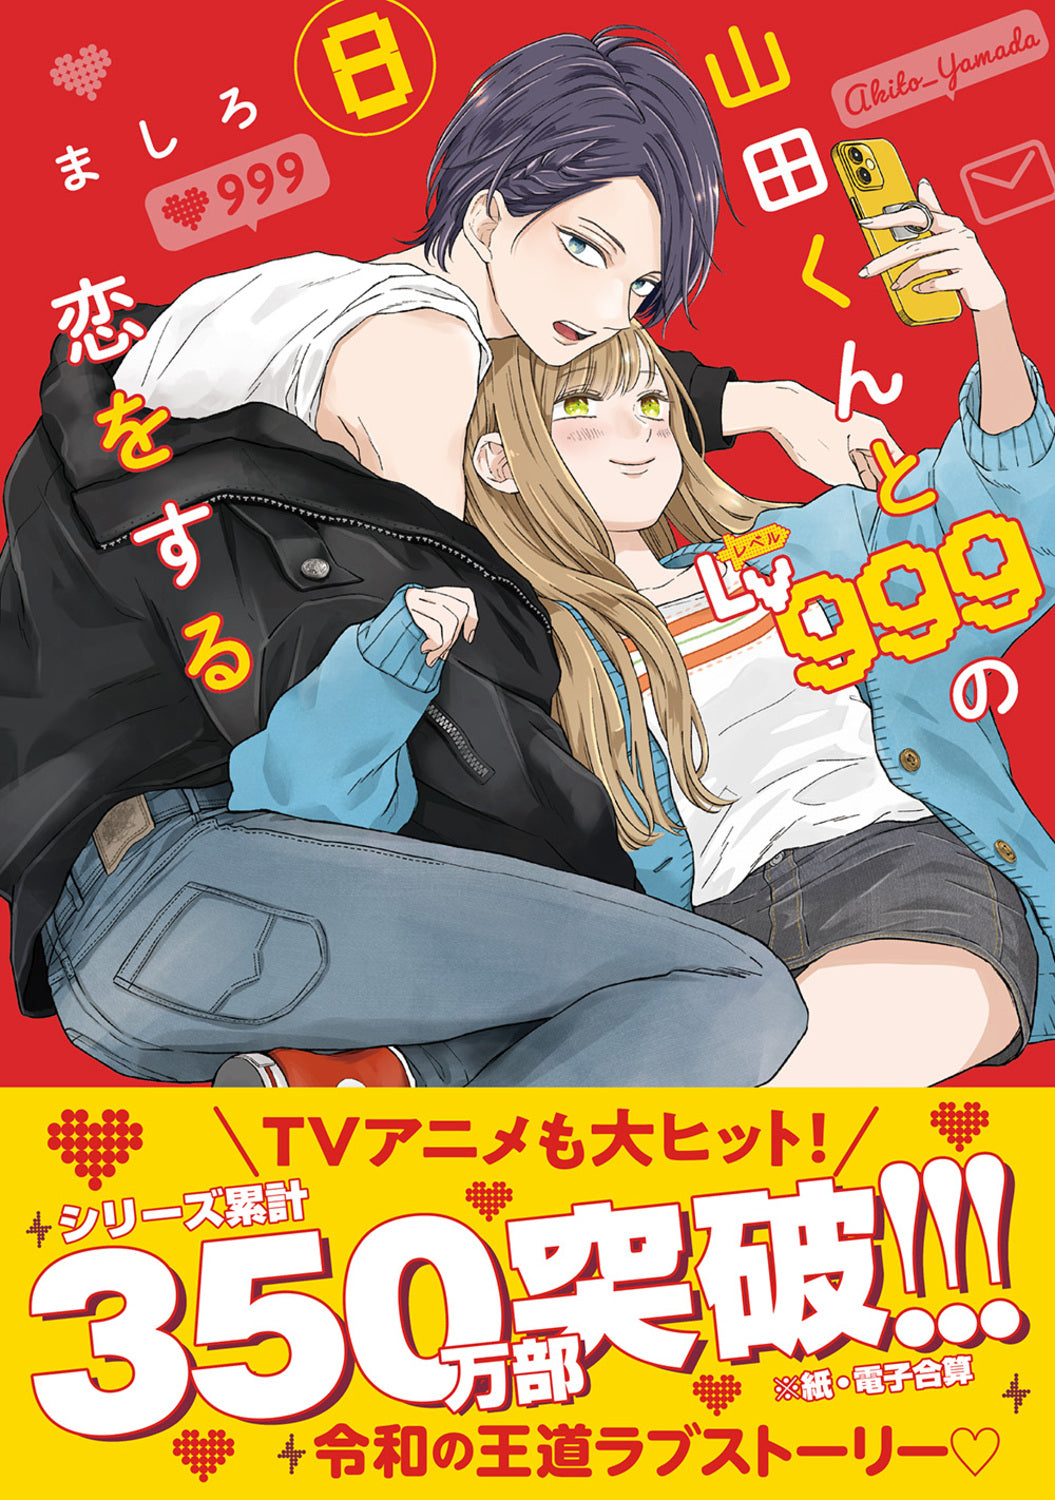 My Lv999 Love for Yamada-kun Vol.1-8 set Japanese Manga Comic Book